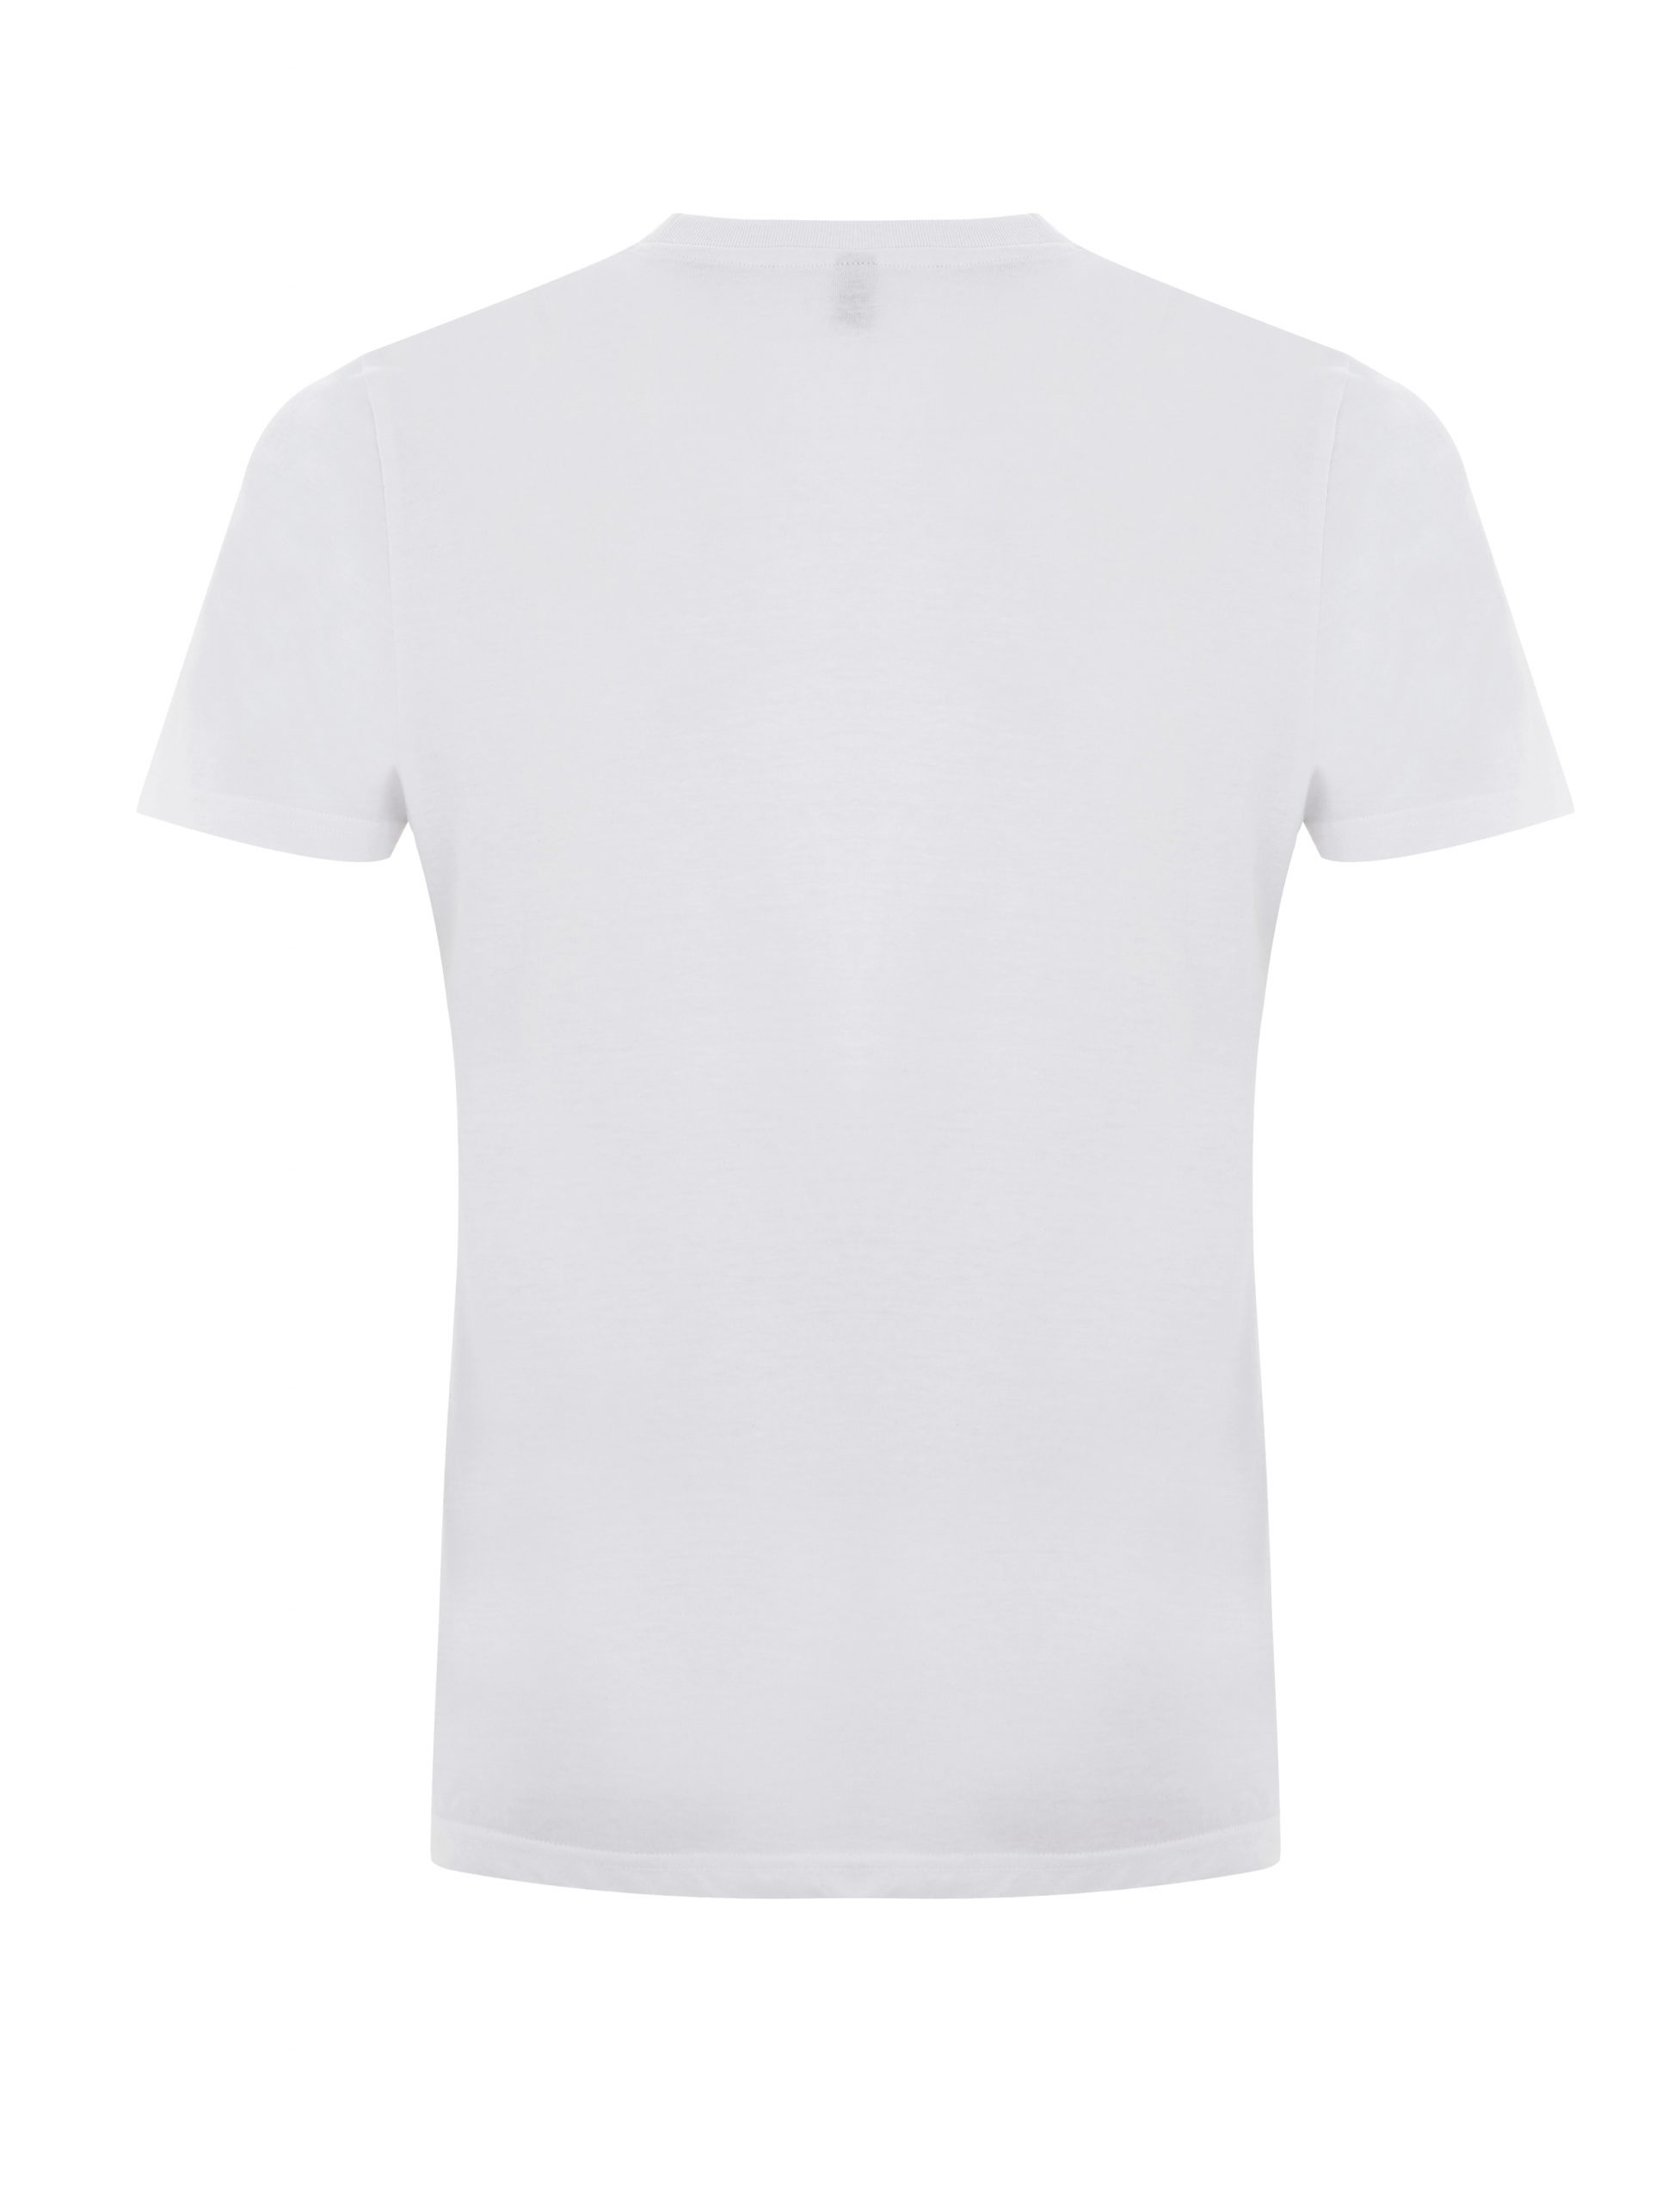 Unisex cycling T-shirt – Tyre Print – Recycled Cotton/Poly – vintvélo